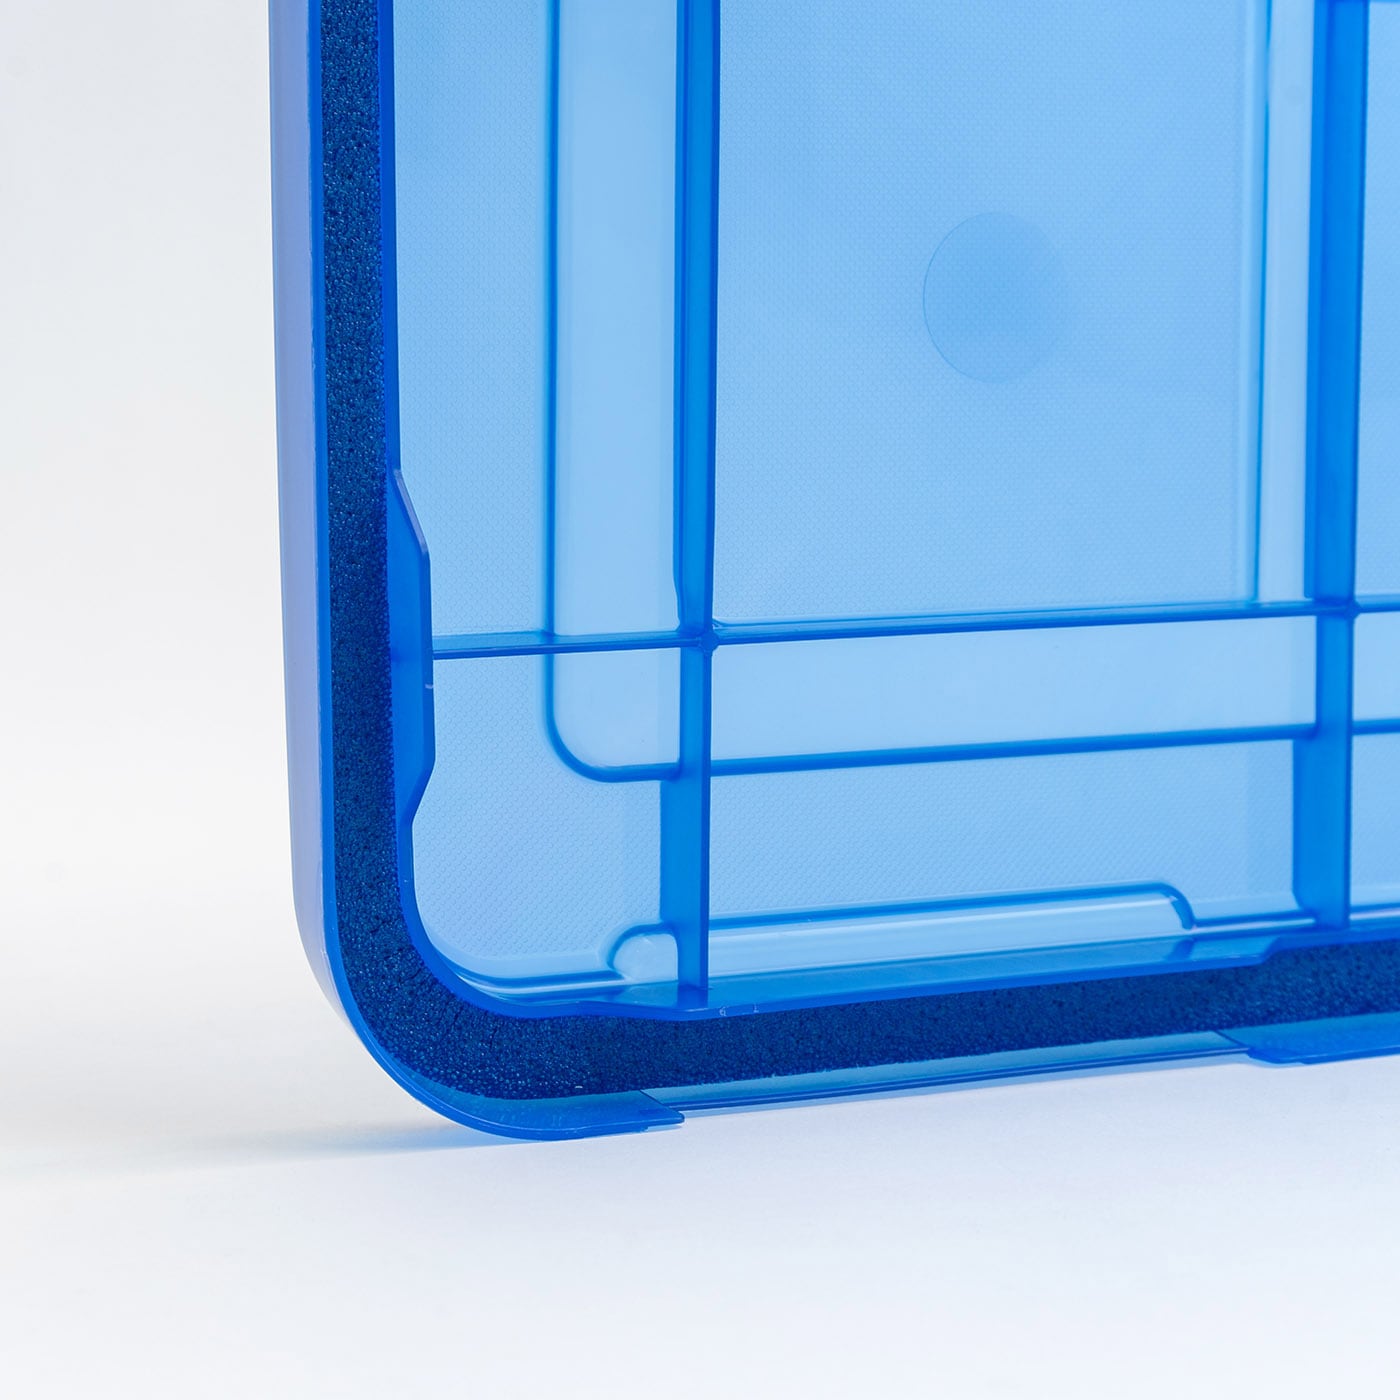 Iris 156 Quart Weatherpro Clear Plastic Storage Box in Blue